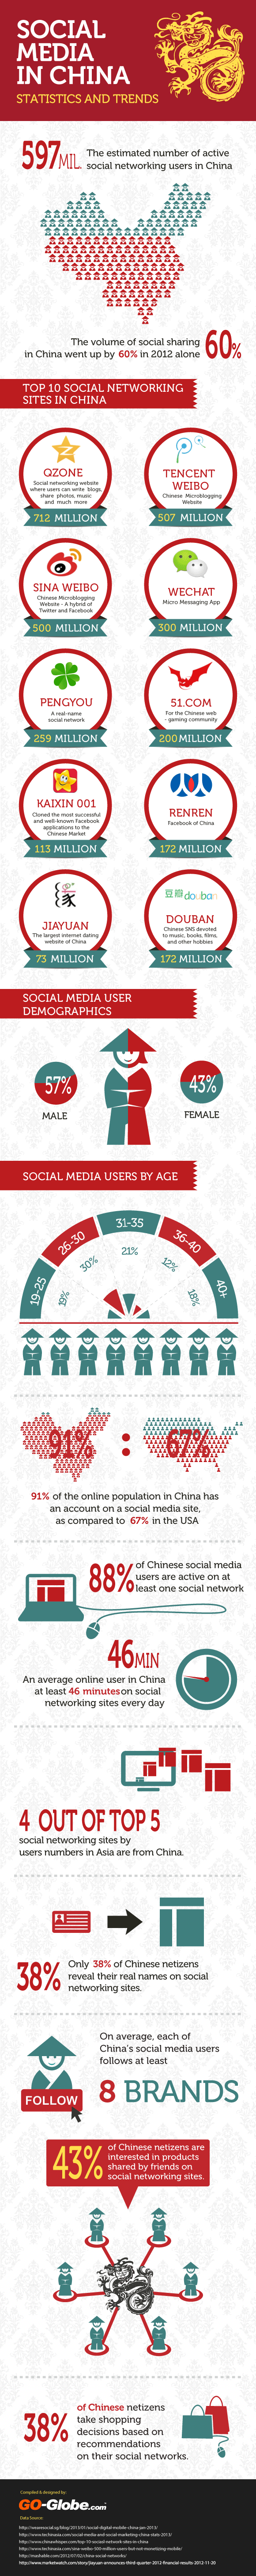 27 Cool China Social Media Statistics, Demographics and Trends